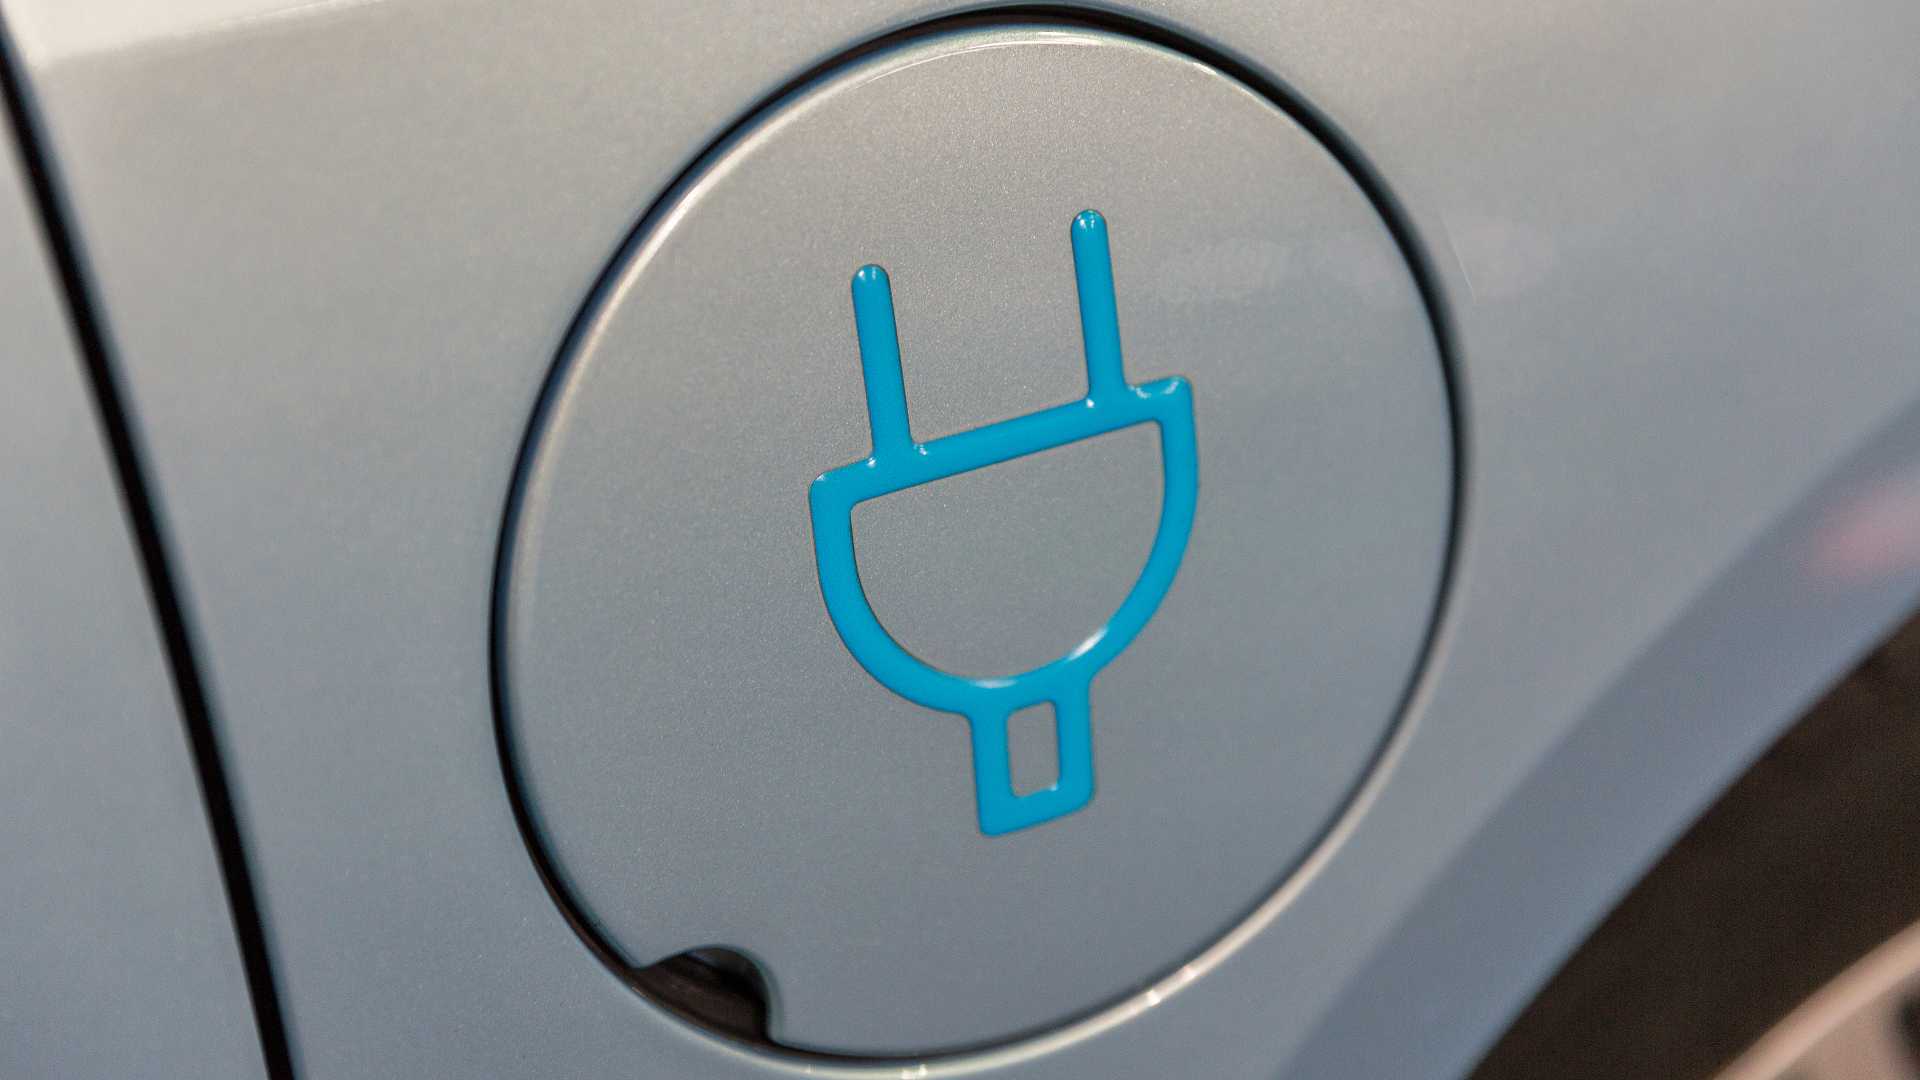 Charging symbol on electric car